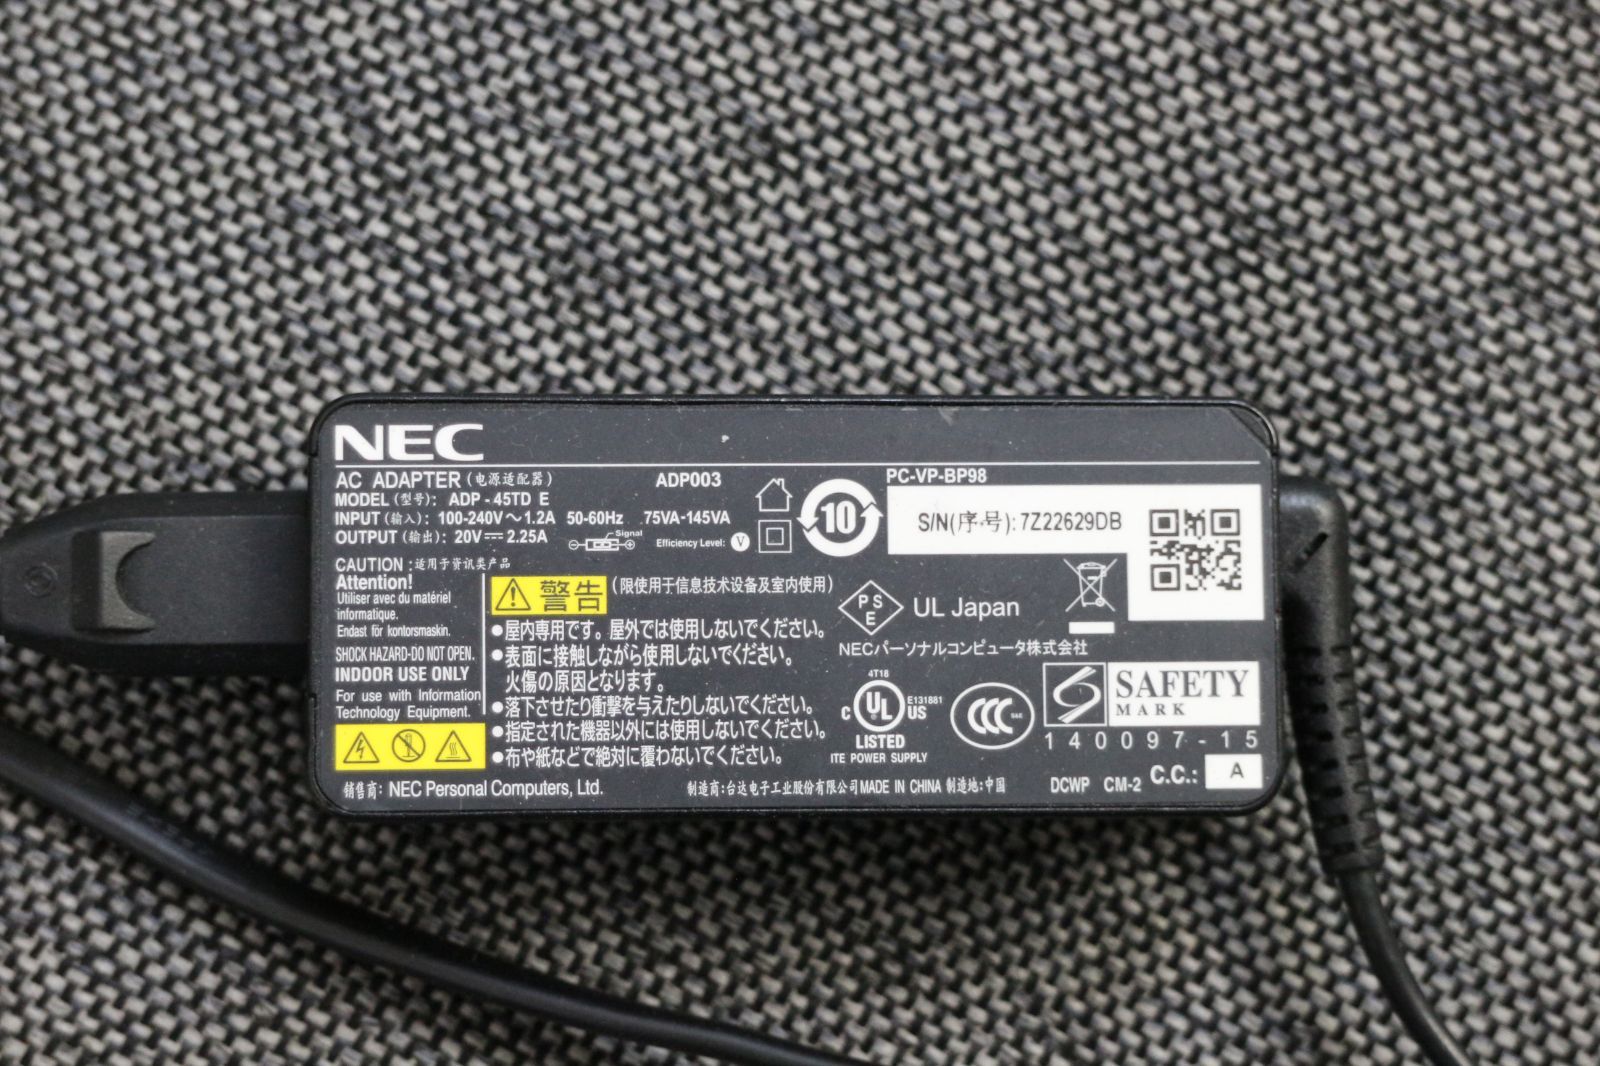 NEC Lavie ノートPC用ACアダプター 20V-2.25A PC-VP-BP98 純正品 - パソコントラブル119 - メルカリ